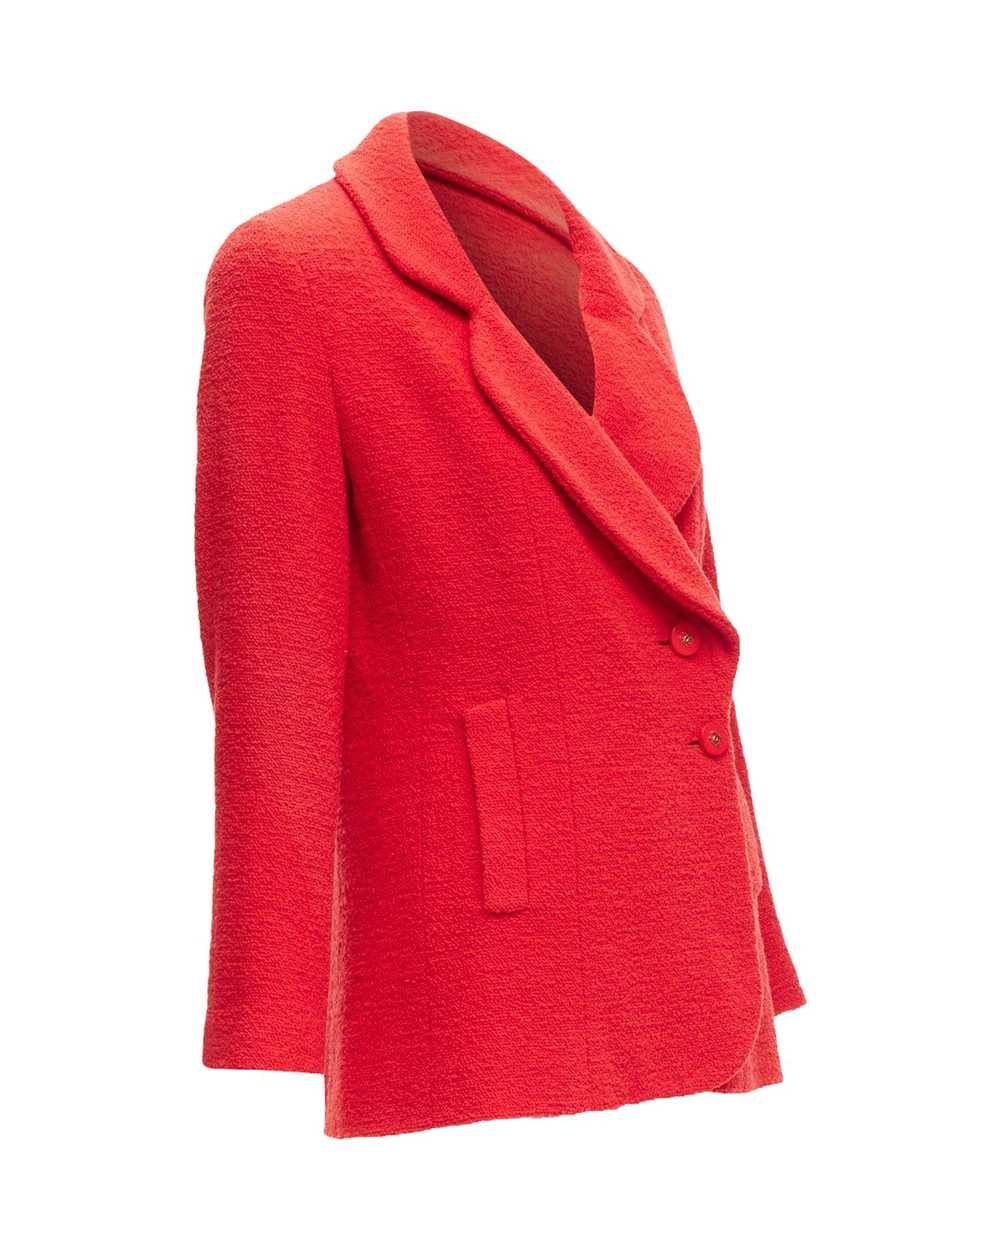 Product Details Chanel Vintage Red Tweed Blazer - image 4